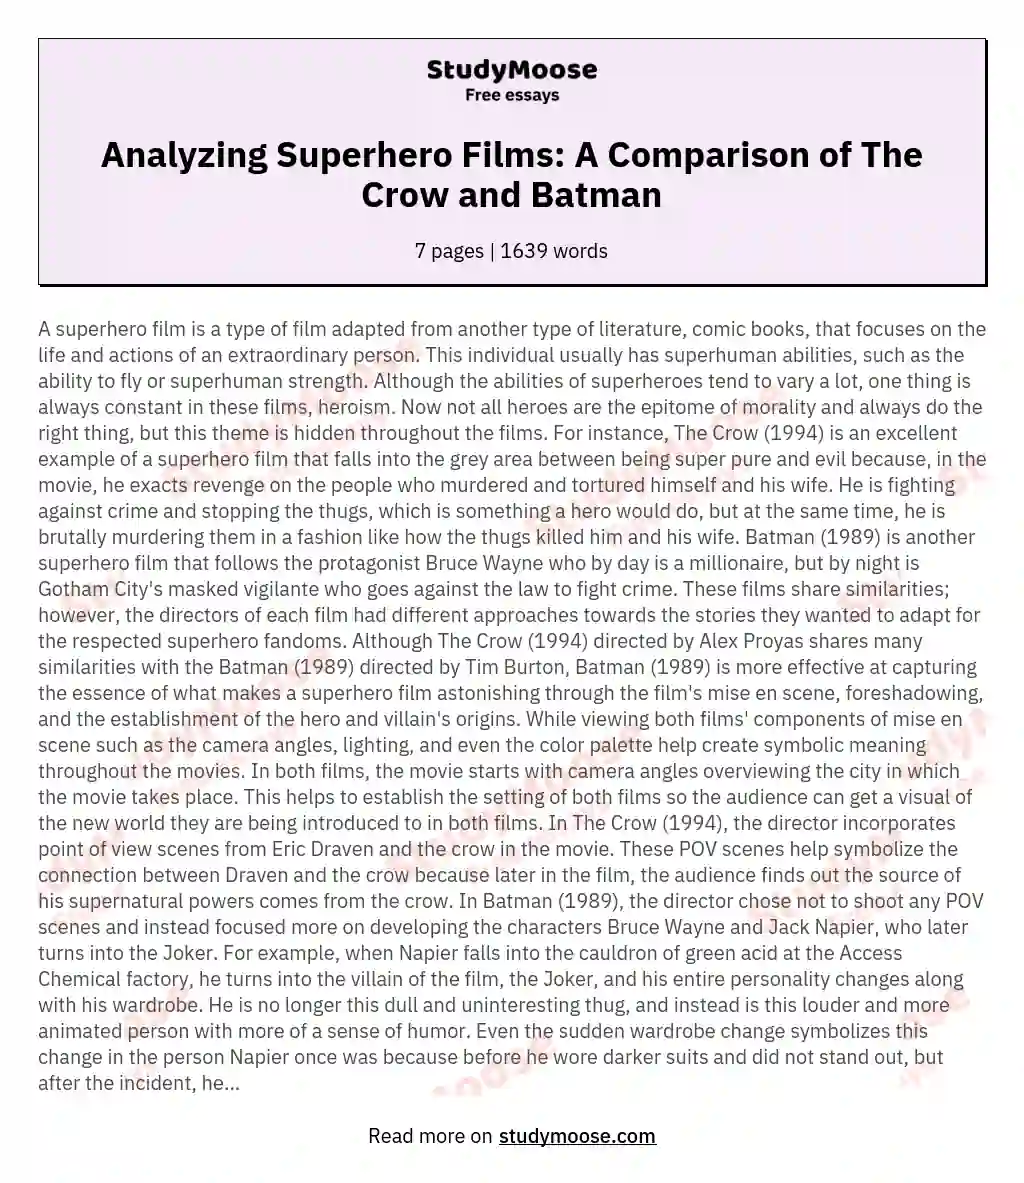 Analyzing Superhero Films: A Comparison of The Crow and Batman essay